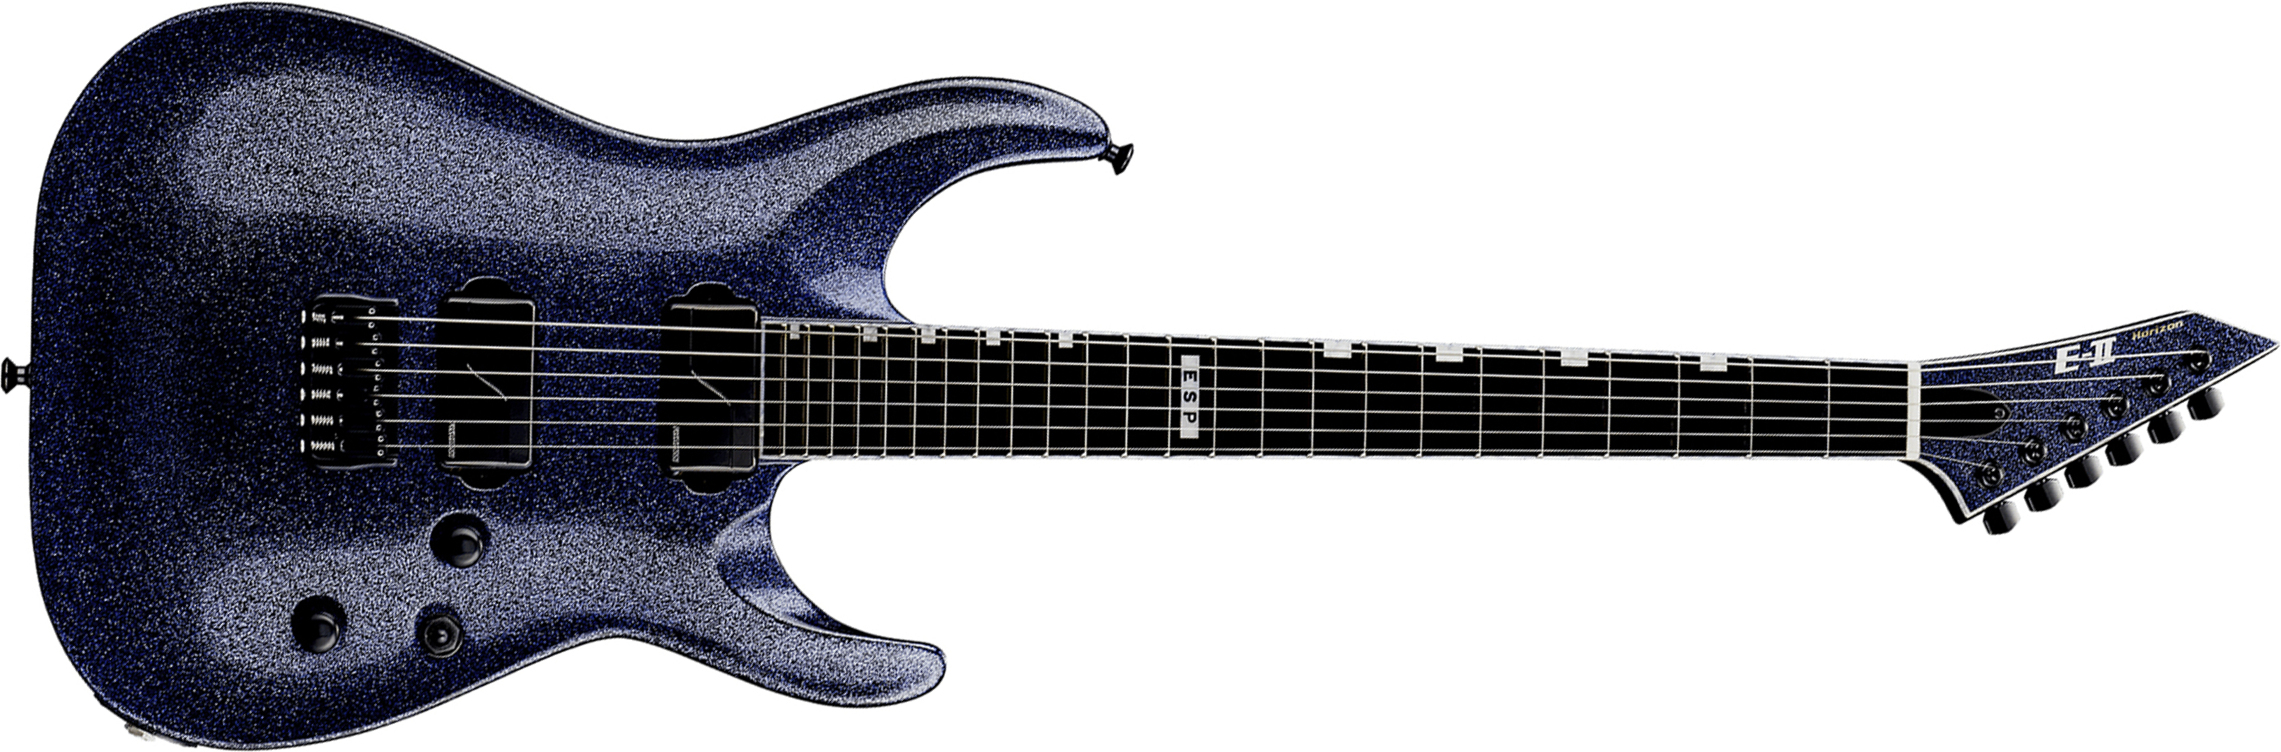 Esp E-ii Horizon Nt Hs Jap 2h Fishman Fluence Modern Ht Eb - Amethyst Sparkle - Str shape electric guitar - Main picture